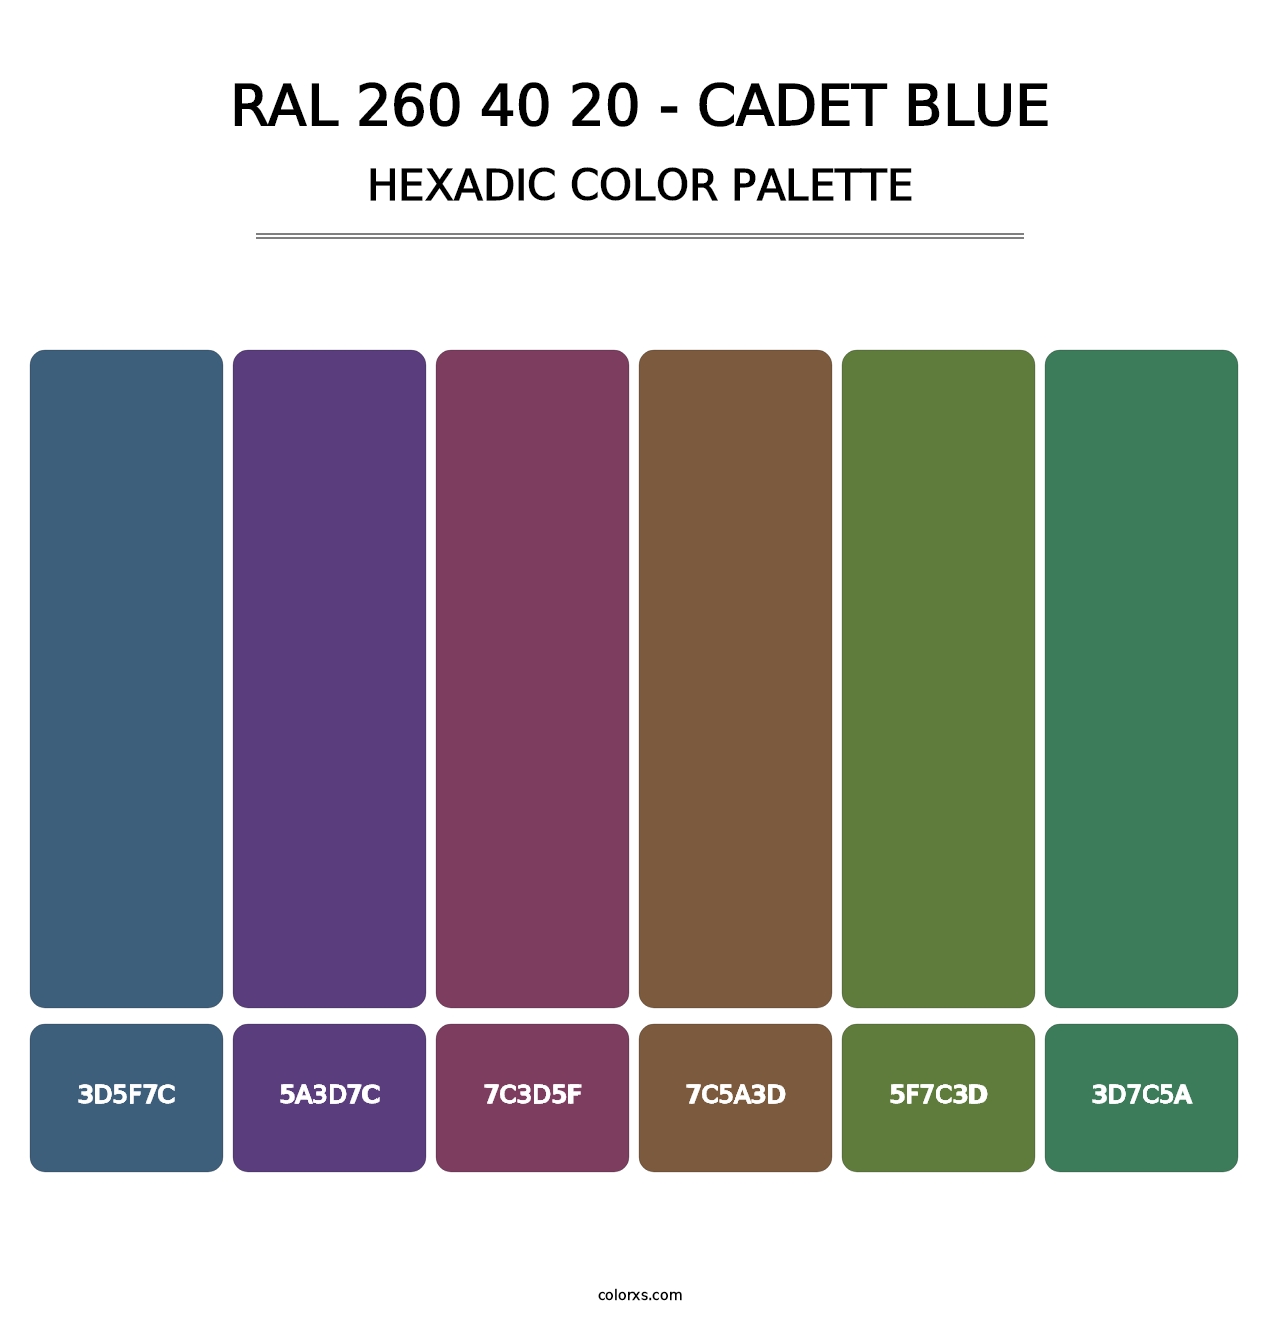 RAL 260 40 20 - Cadet Blue - Hexadic Color Palette